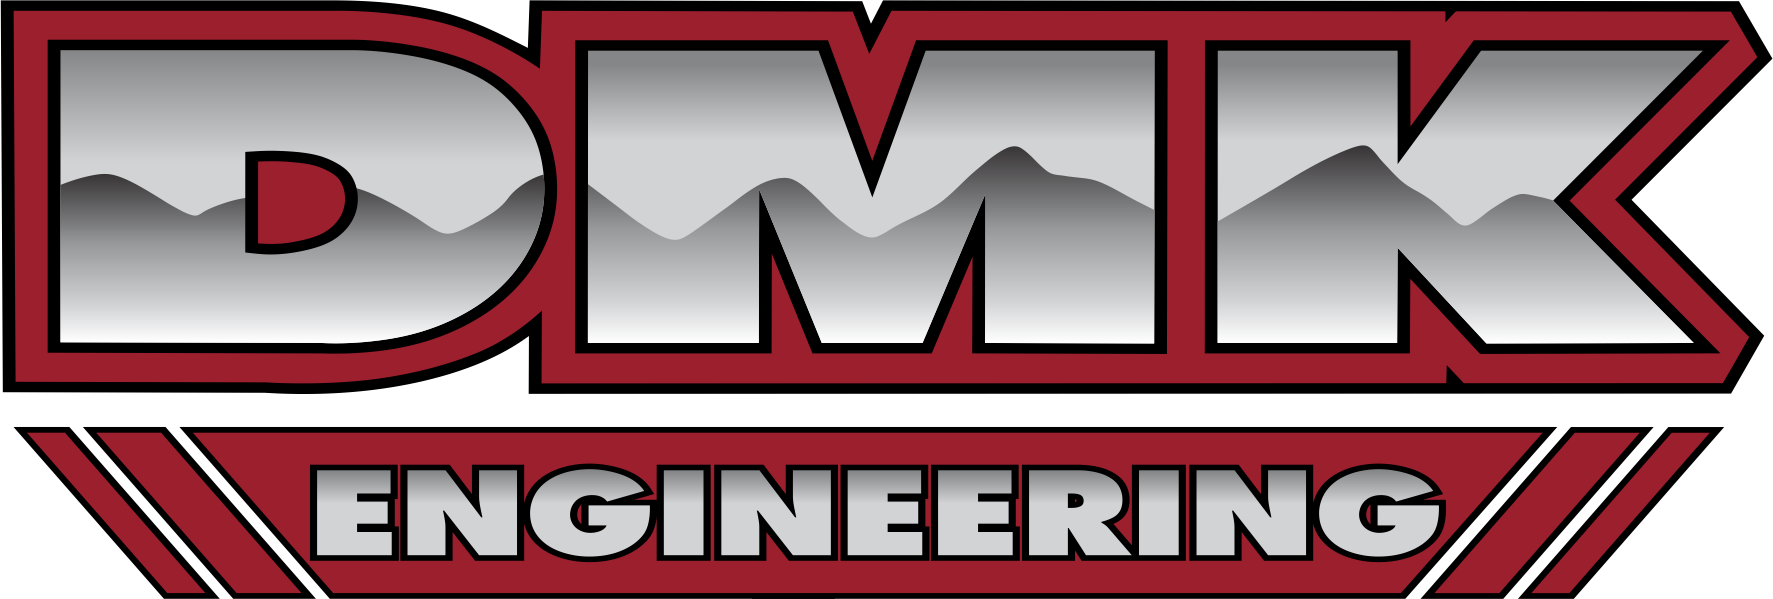 DMK Engineering Pty Ltd